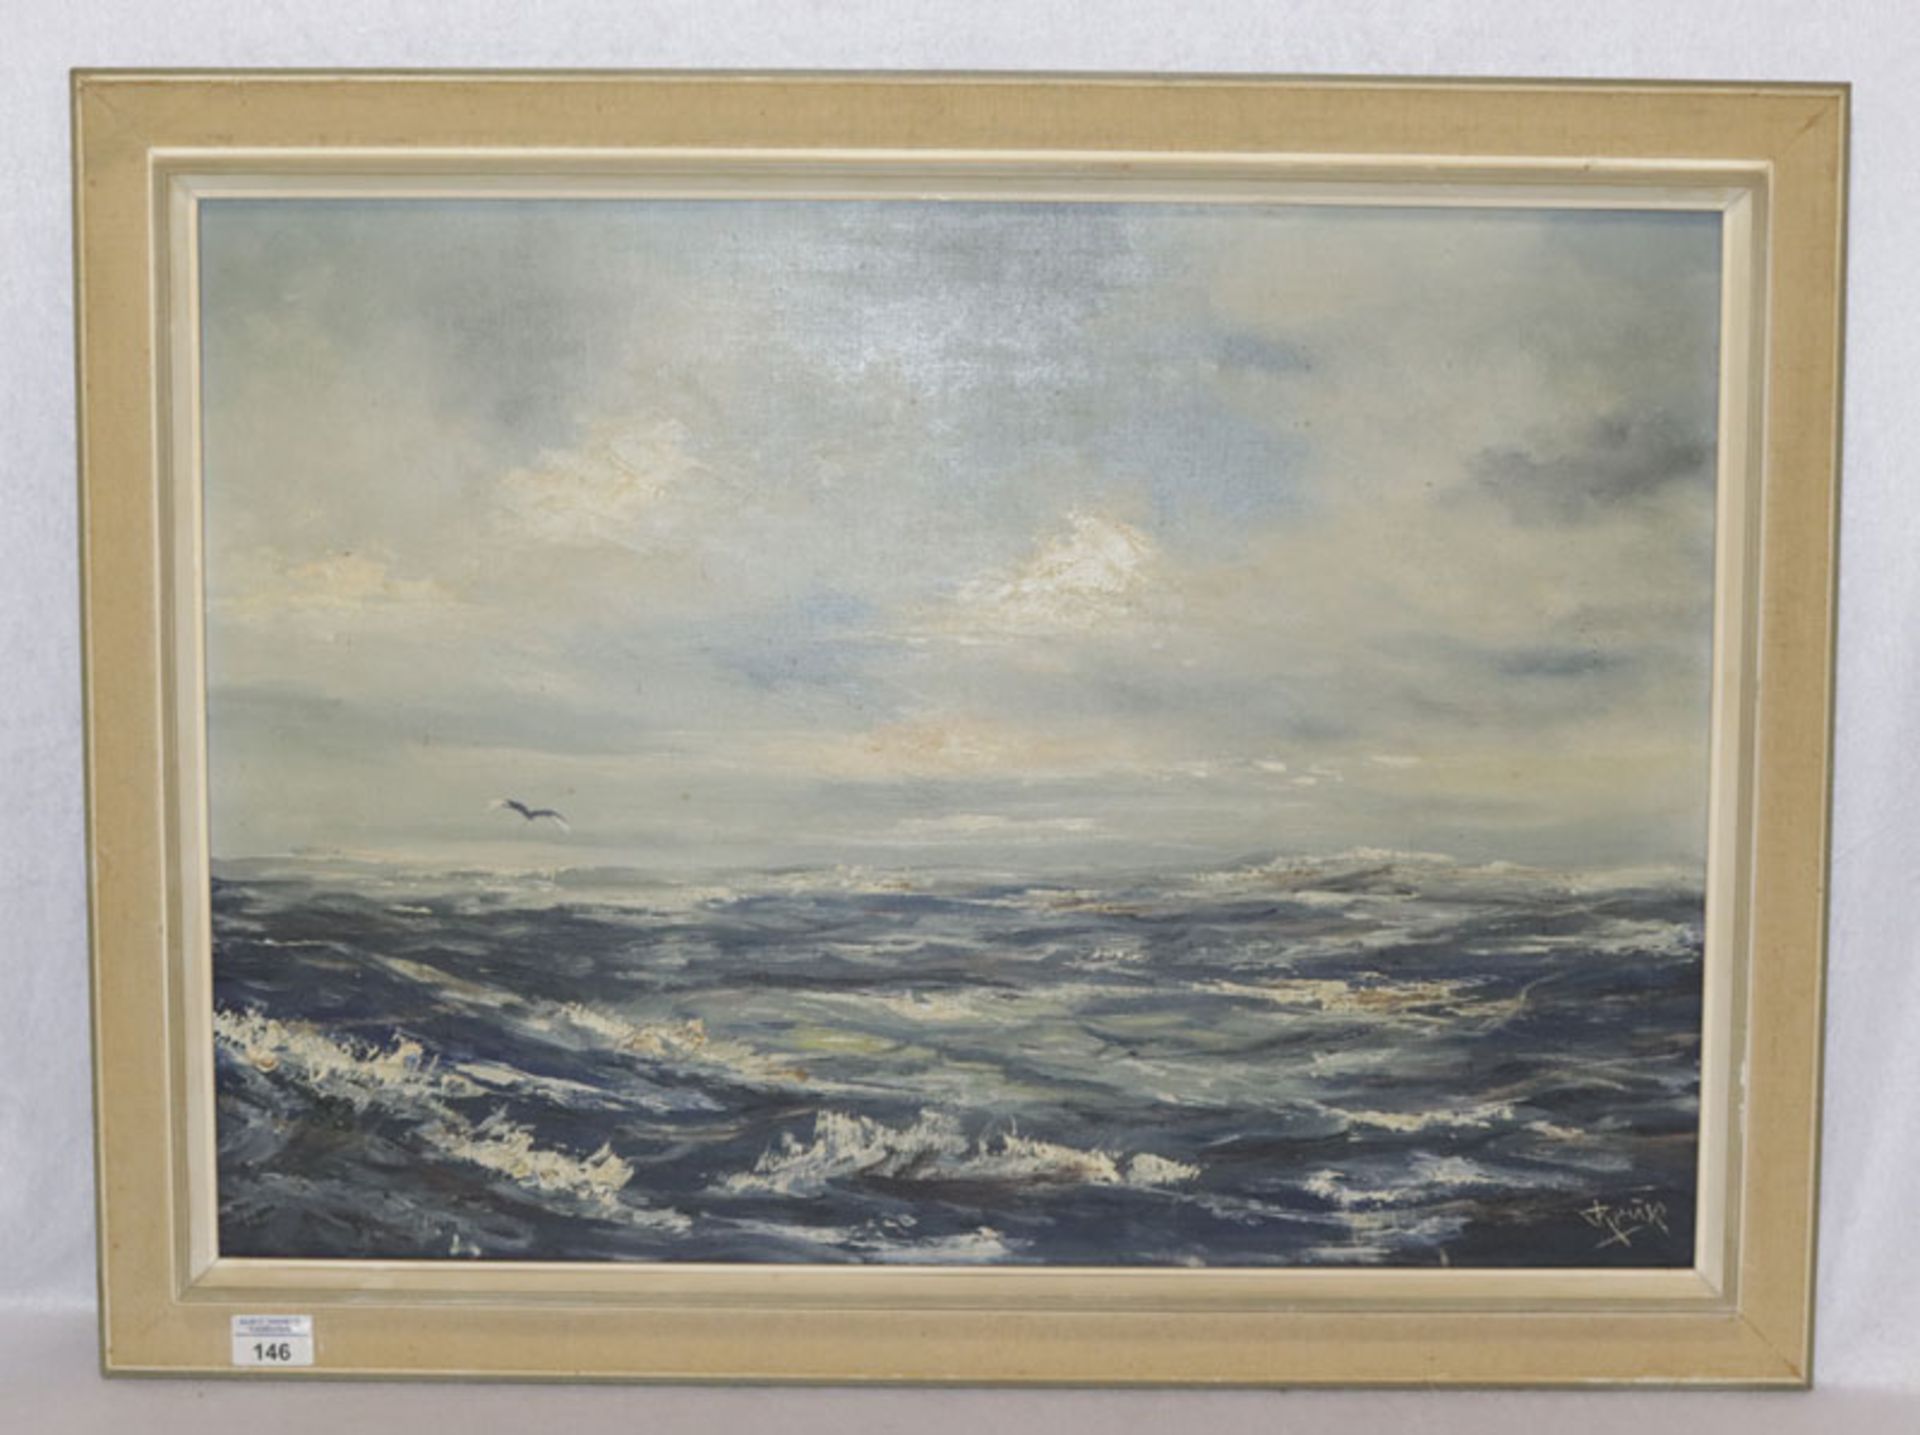 Gemälde ÖL/LW 'Meeresstück', undeutlch signiert, gerahmt, Rahmen beschädigt, incl. Rahmen 61 cm x 80